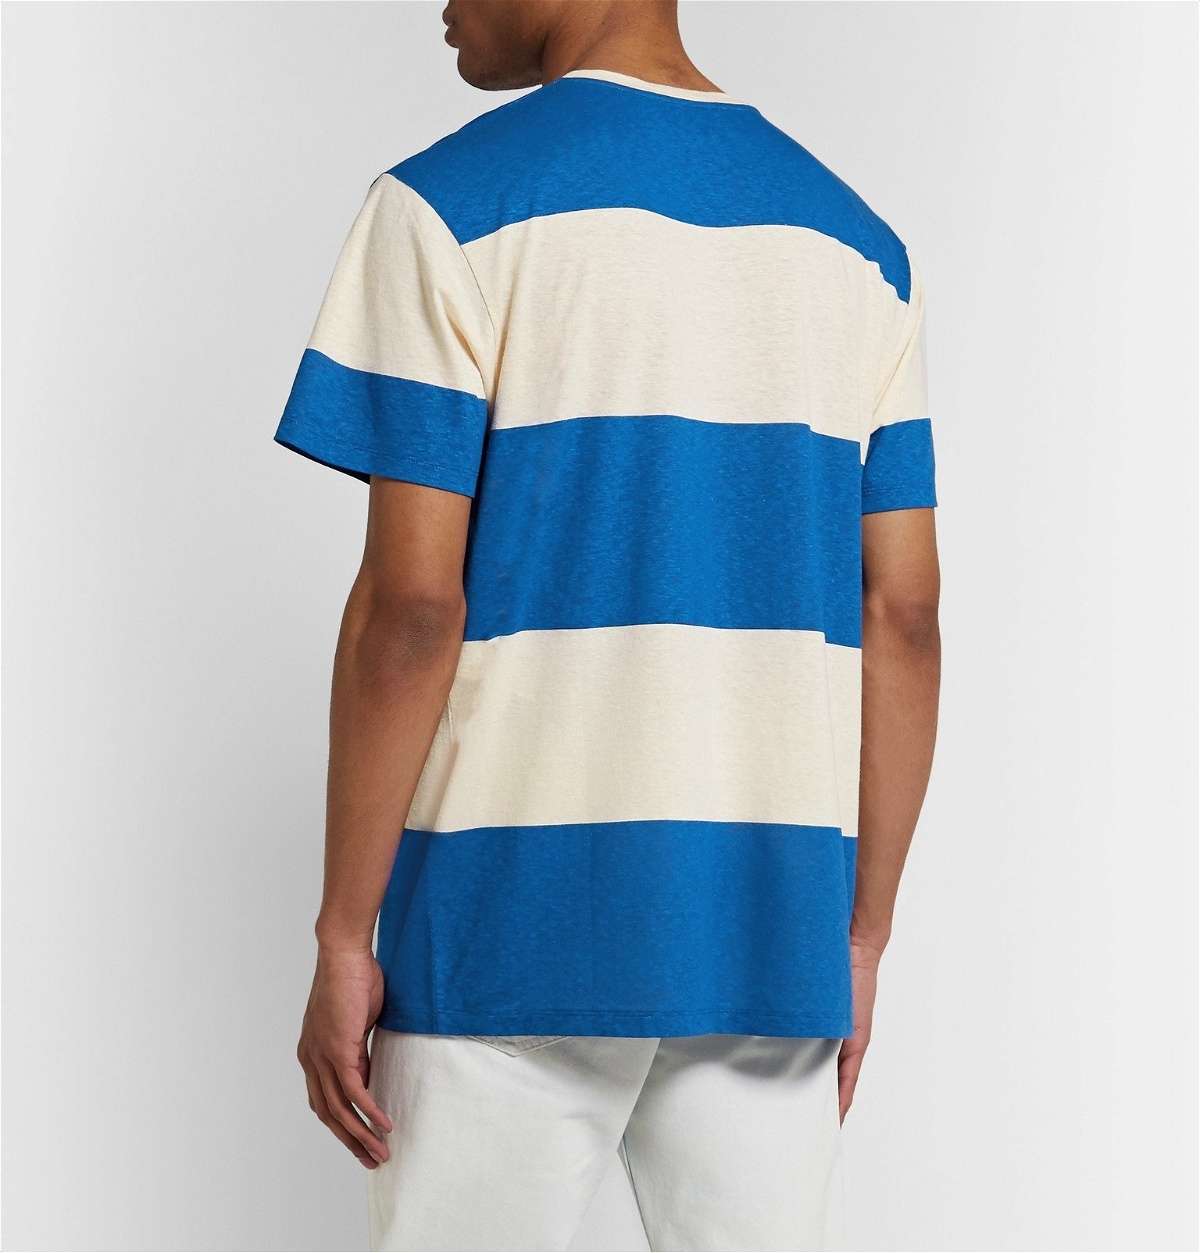 Gucci - Logo-Print Striped Cotton and Hemp-Blend T-Shirt - Blue Gucci